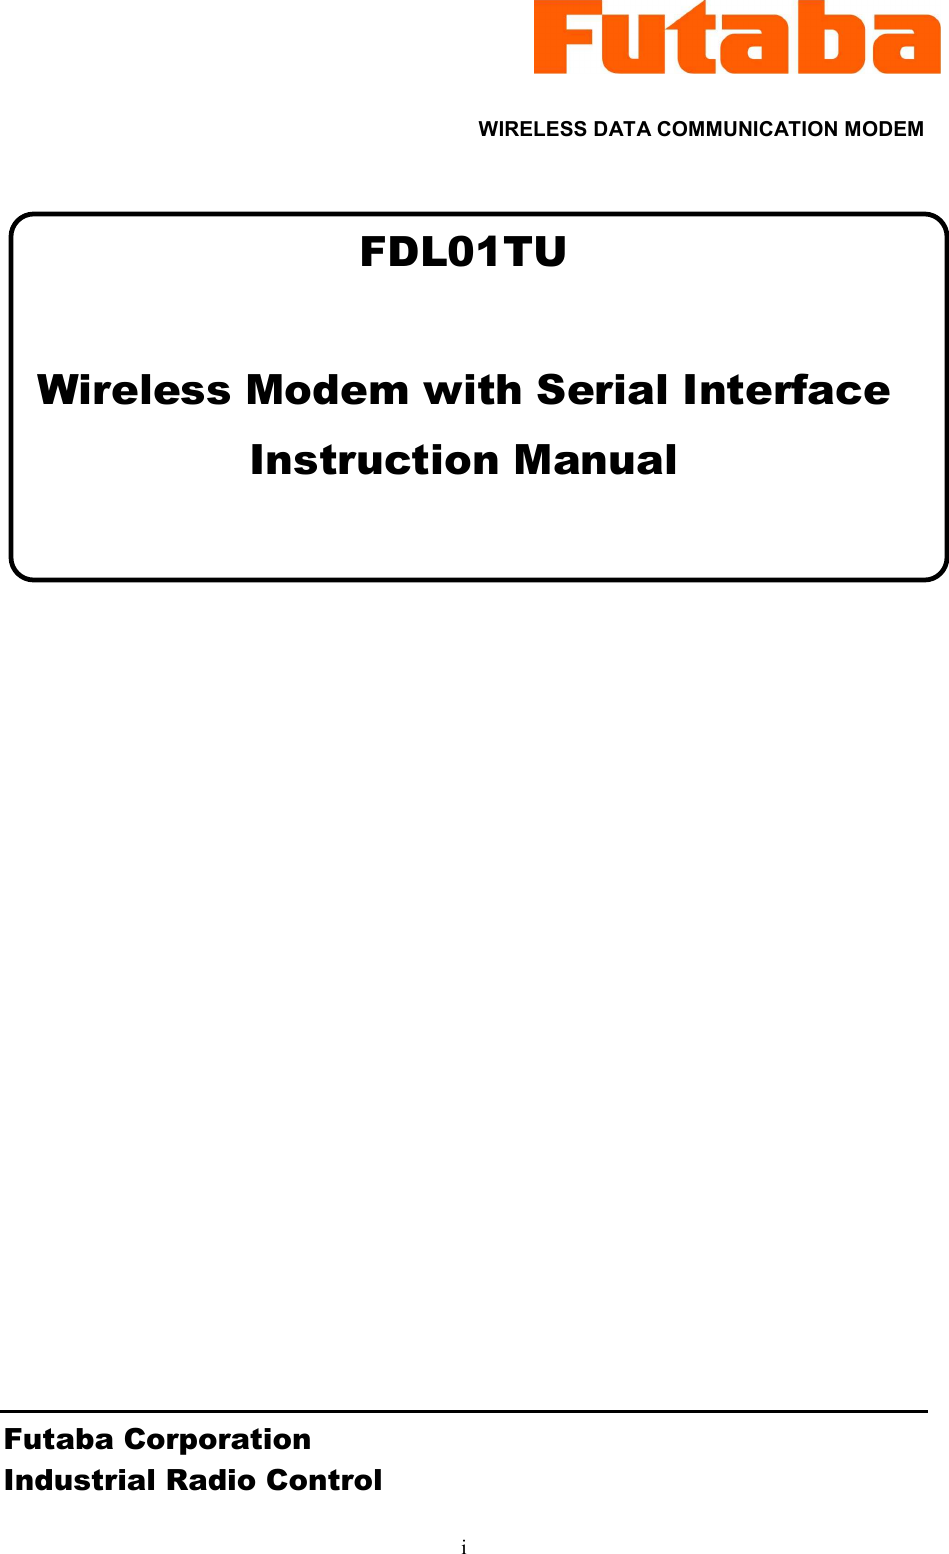   i WIRELESS DATA COMMUNICATION MODEM  FDL01TU   Wireless Modem with Serial Interface Instruction Manual                      Futaba Corporation Industrial Radio Control 